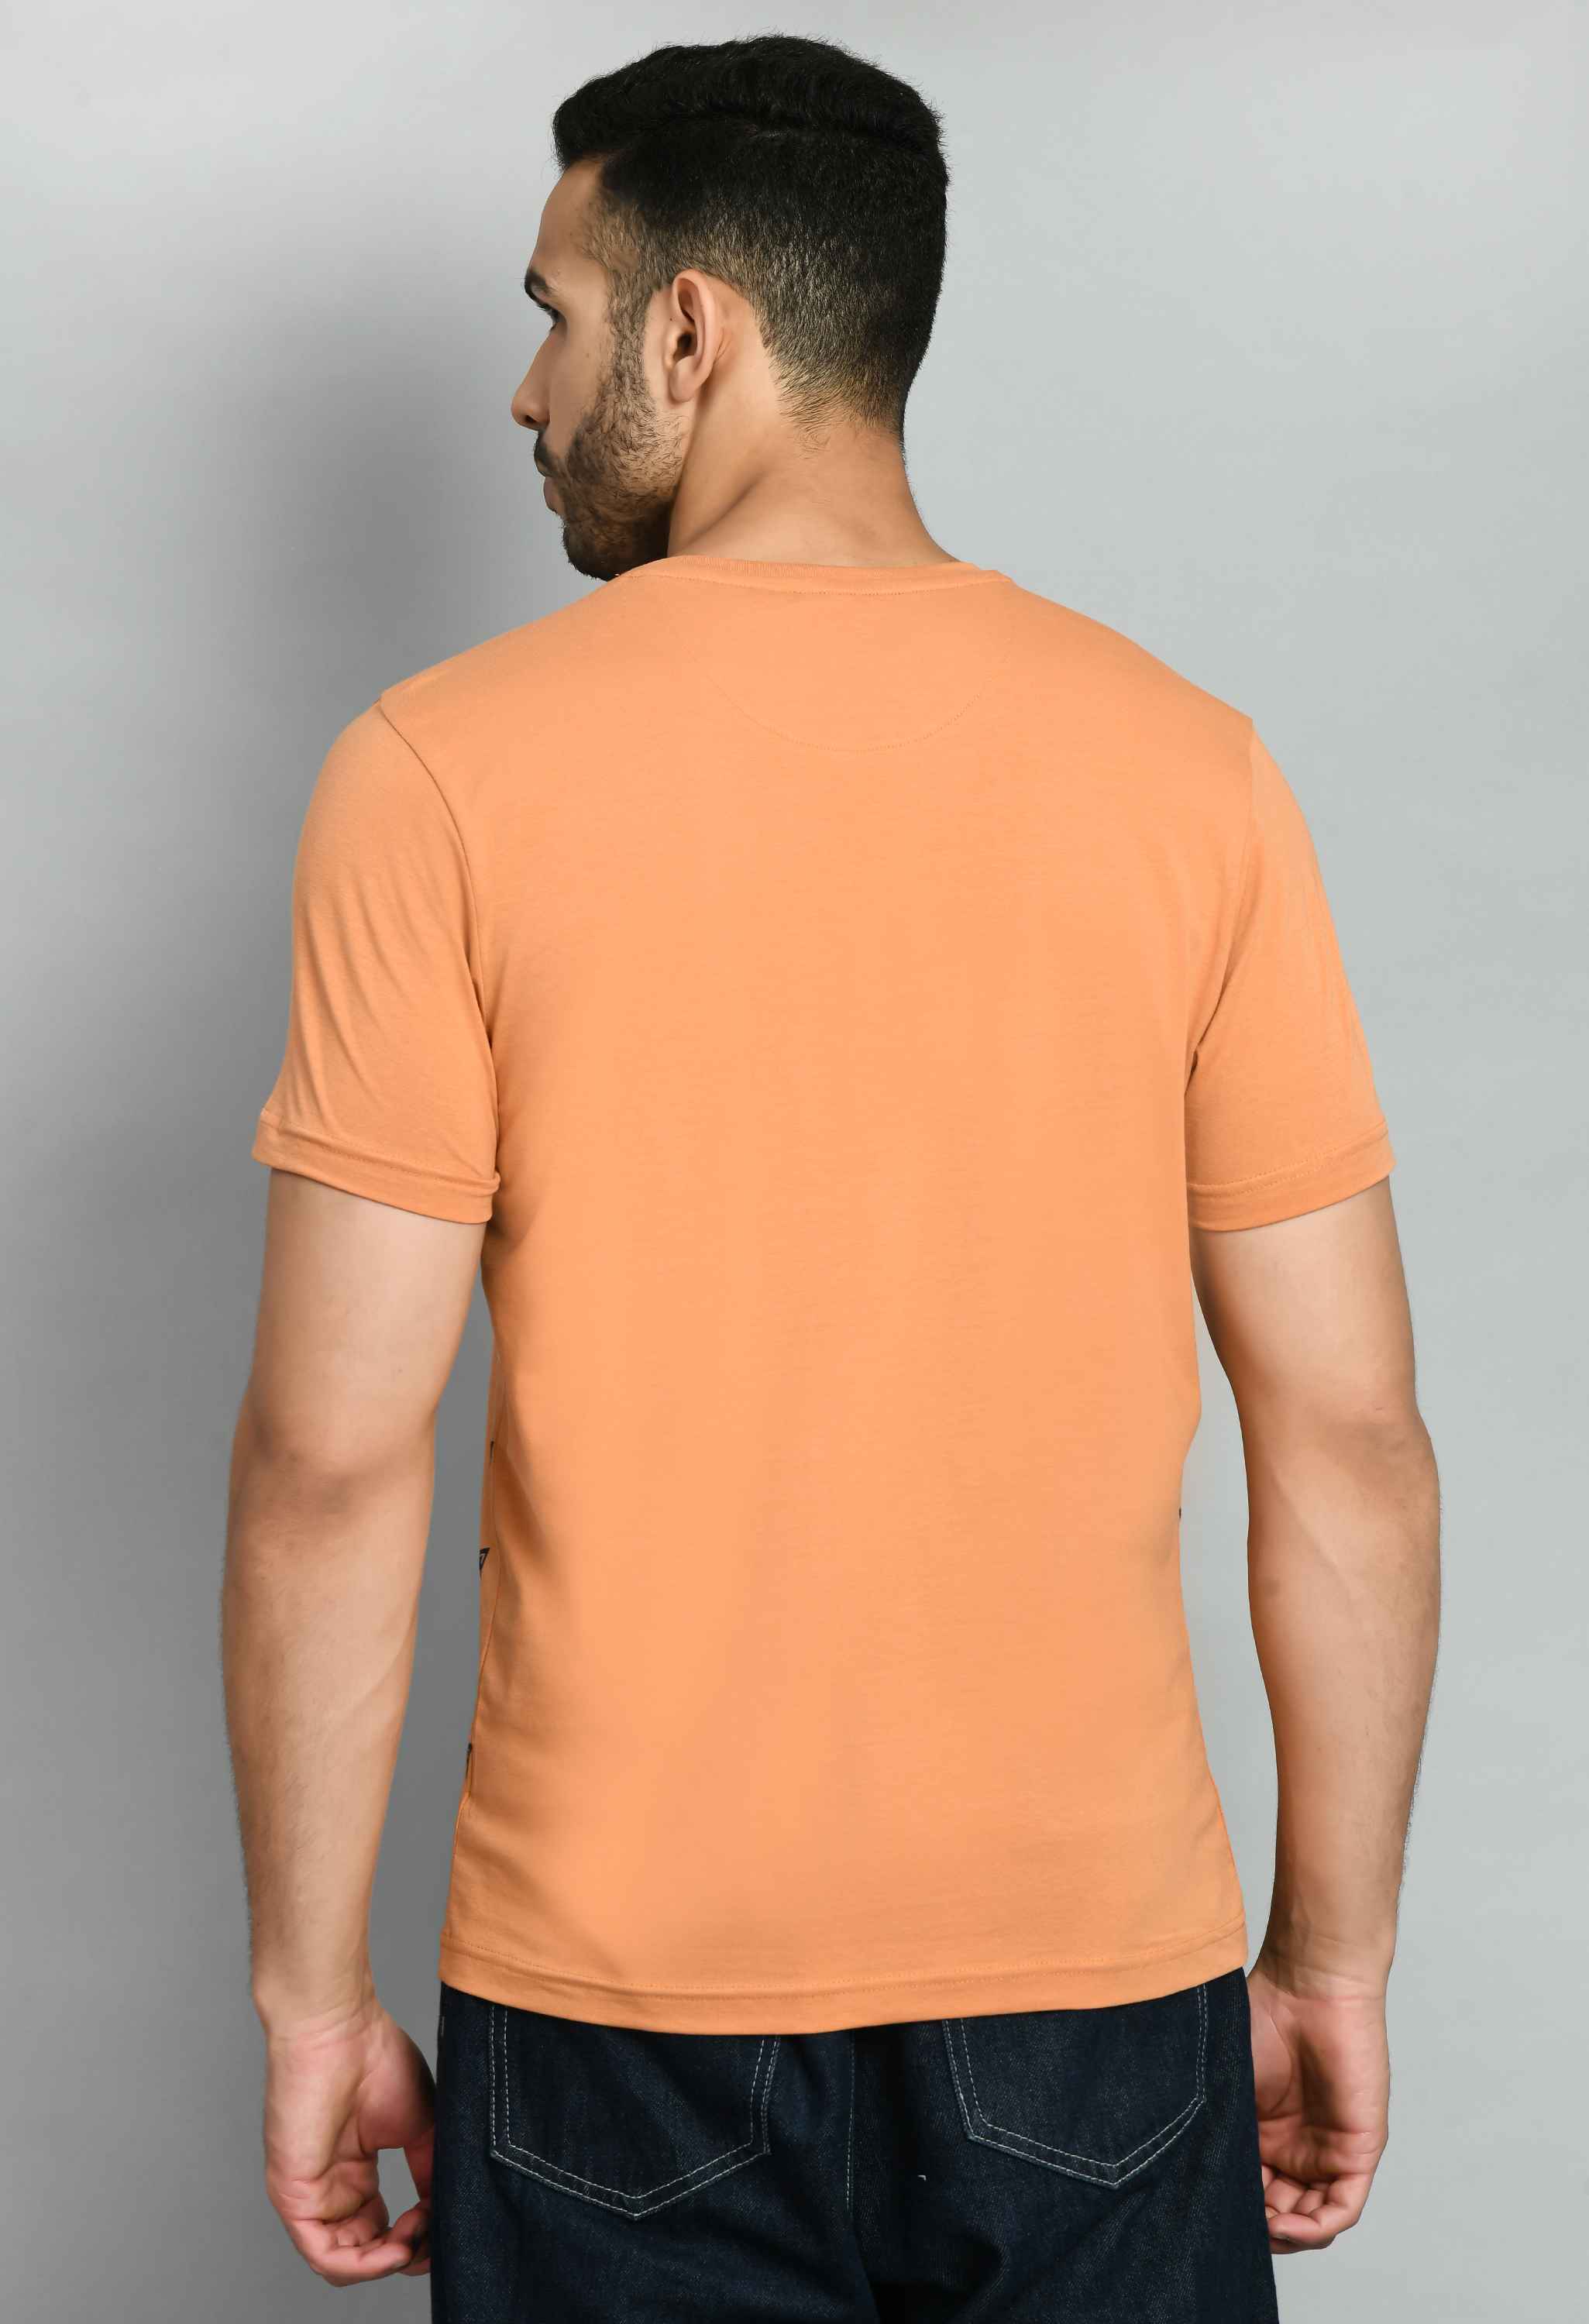 Men's Light Orange Printed T-Shirt